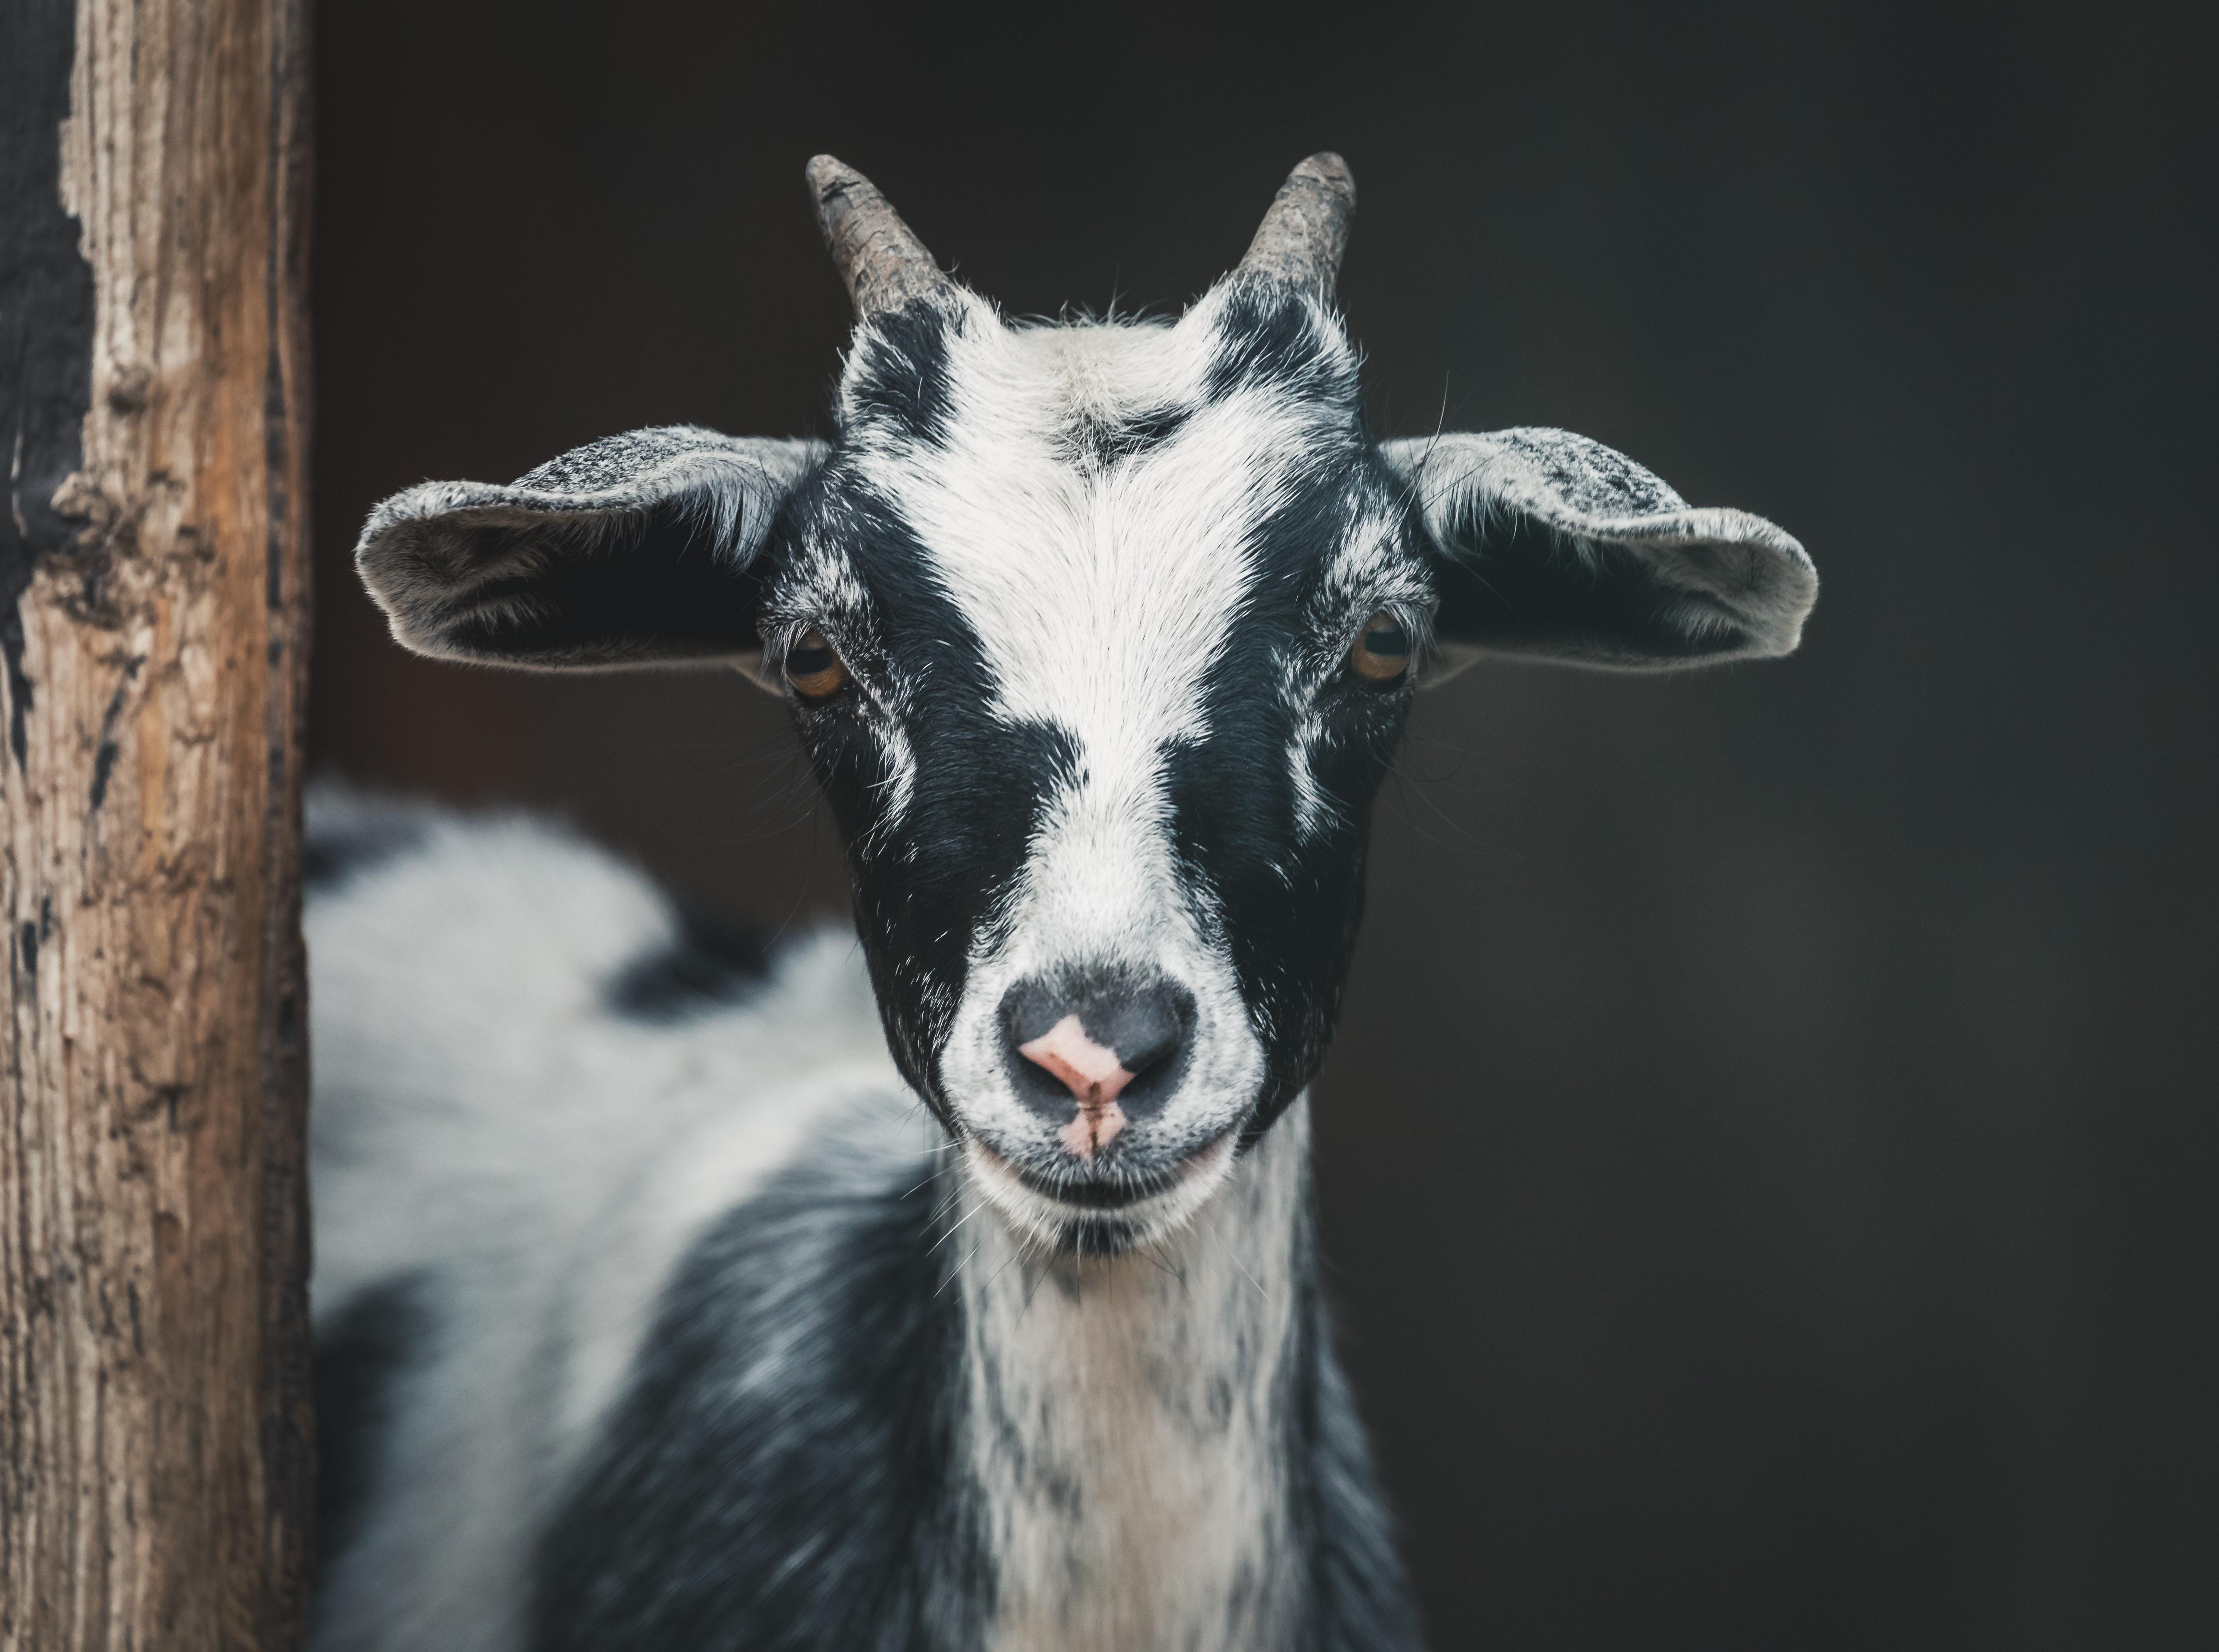 Goat Yoga at Strohmer's Farm